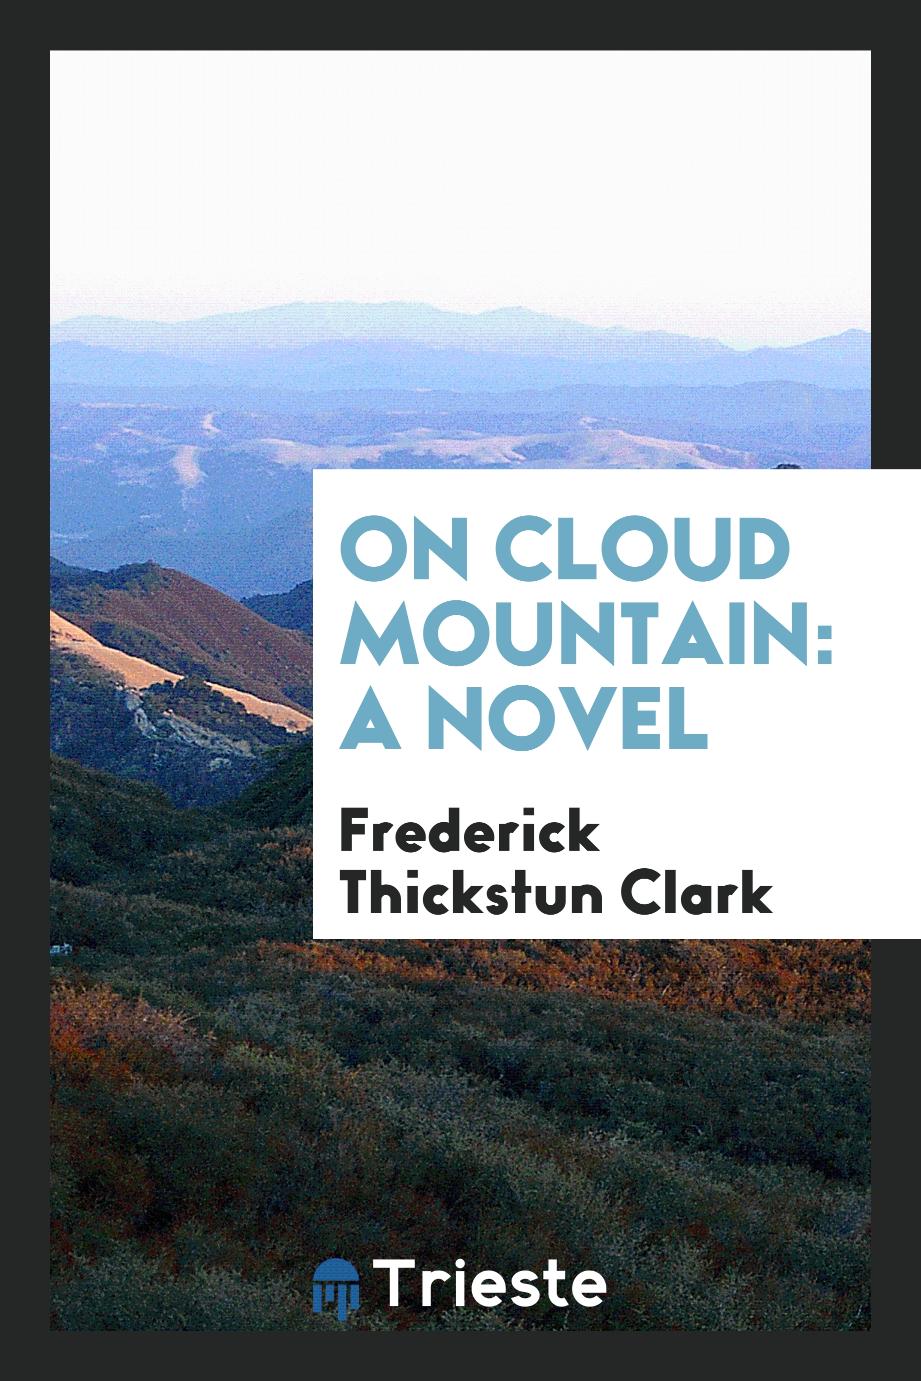 On Cloud Mountain: A Novel